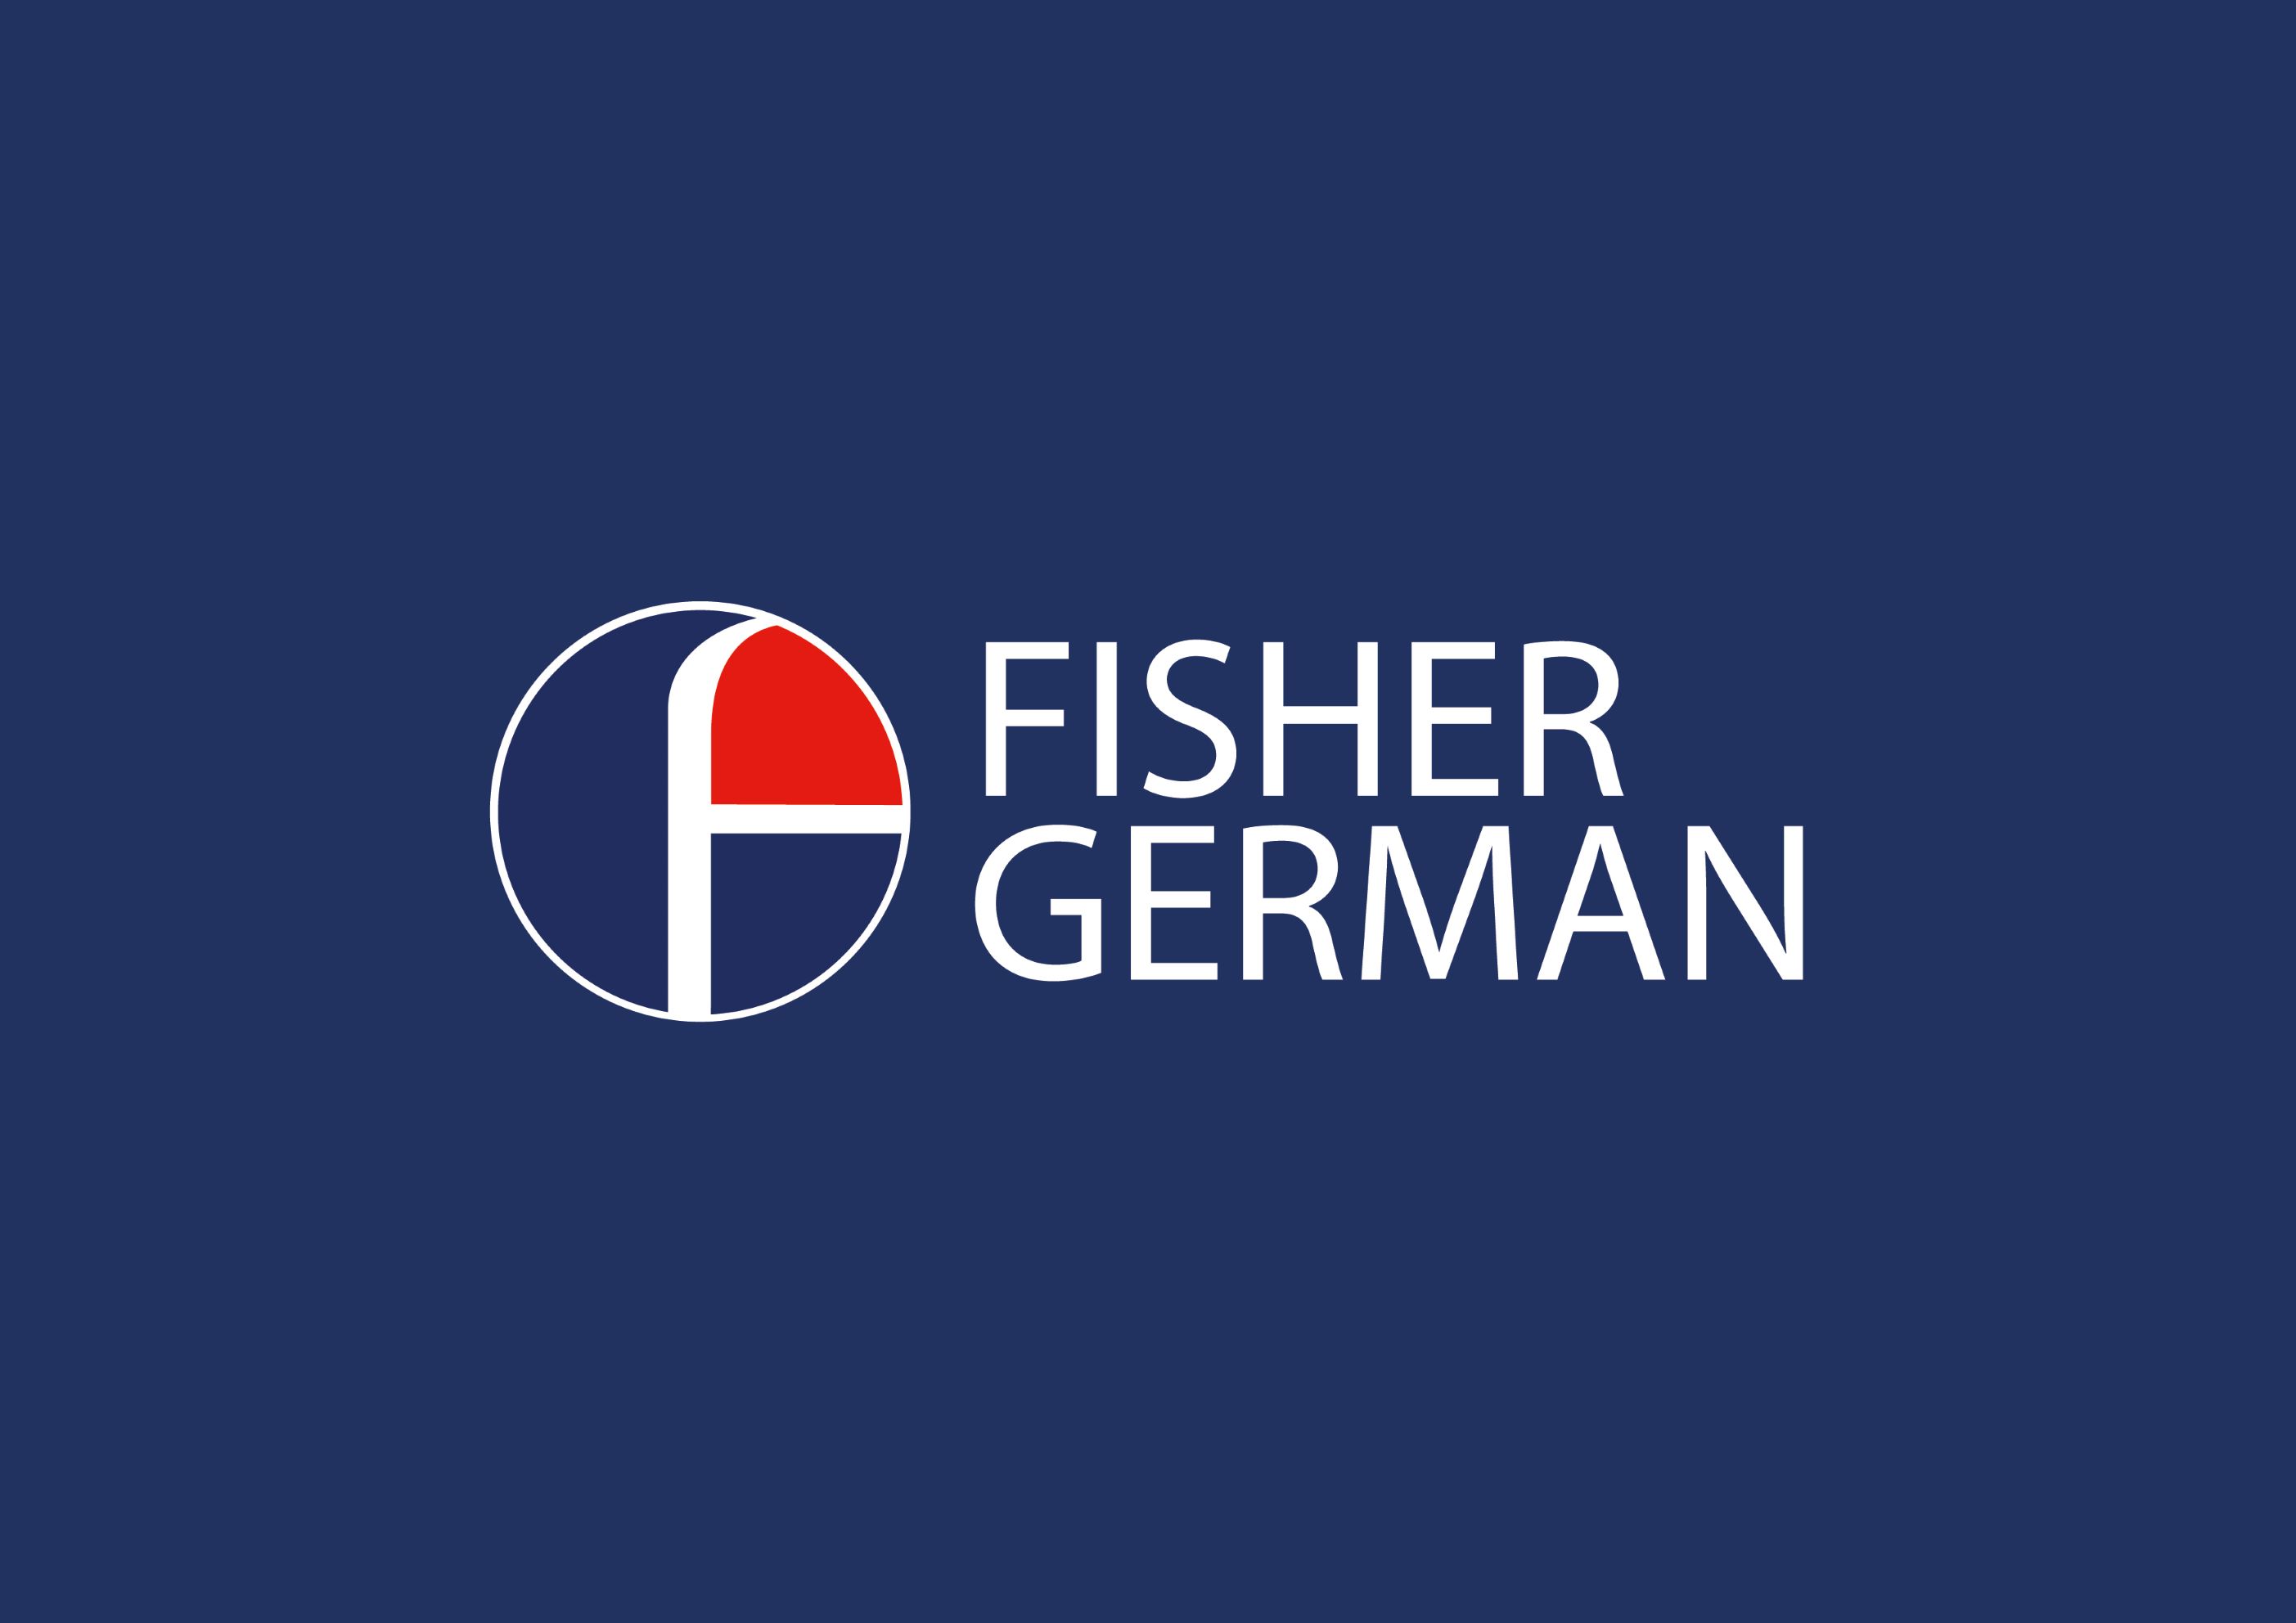 Fisher German   blue logo 01 003